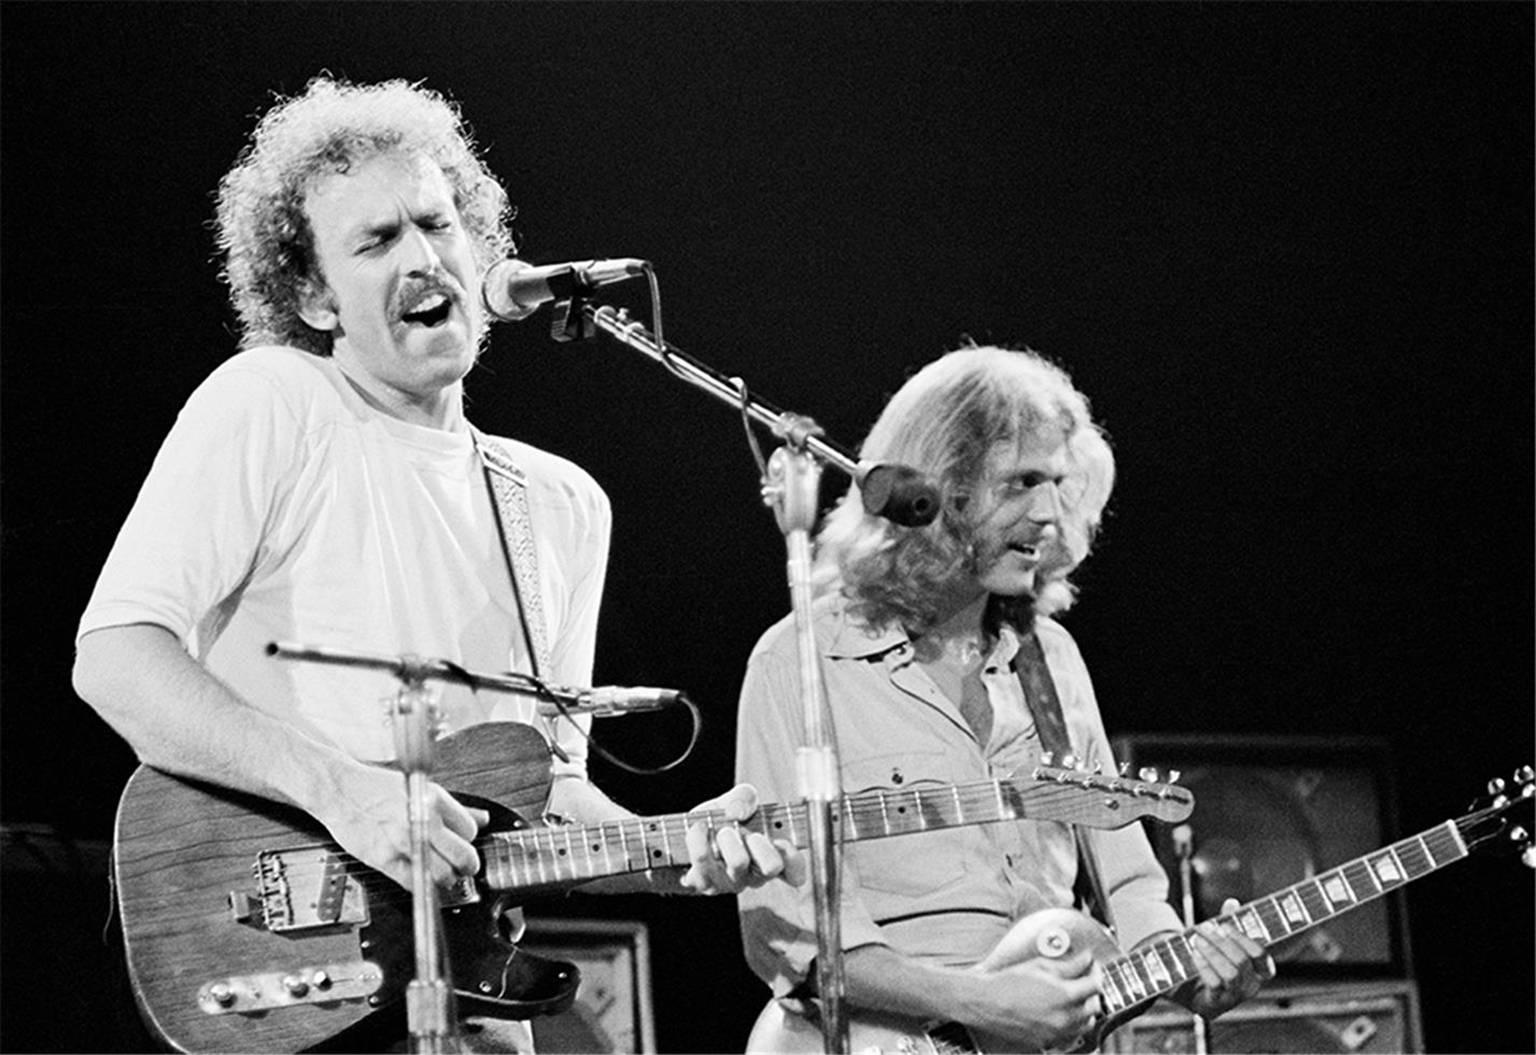 Bill Green Black and White Photograph - Bernie Leadon & Don Felder, 1974